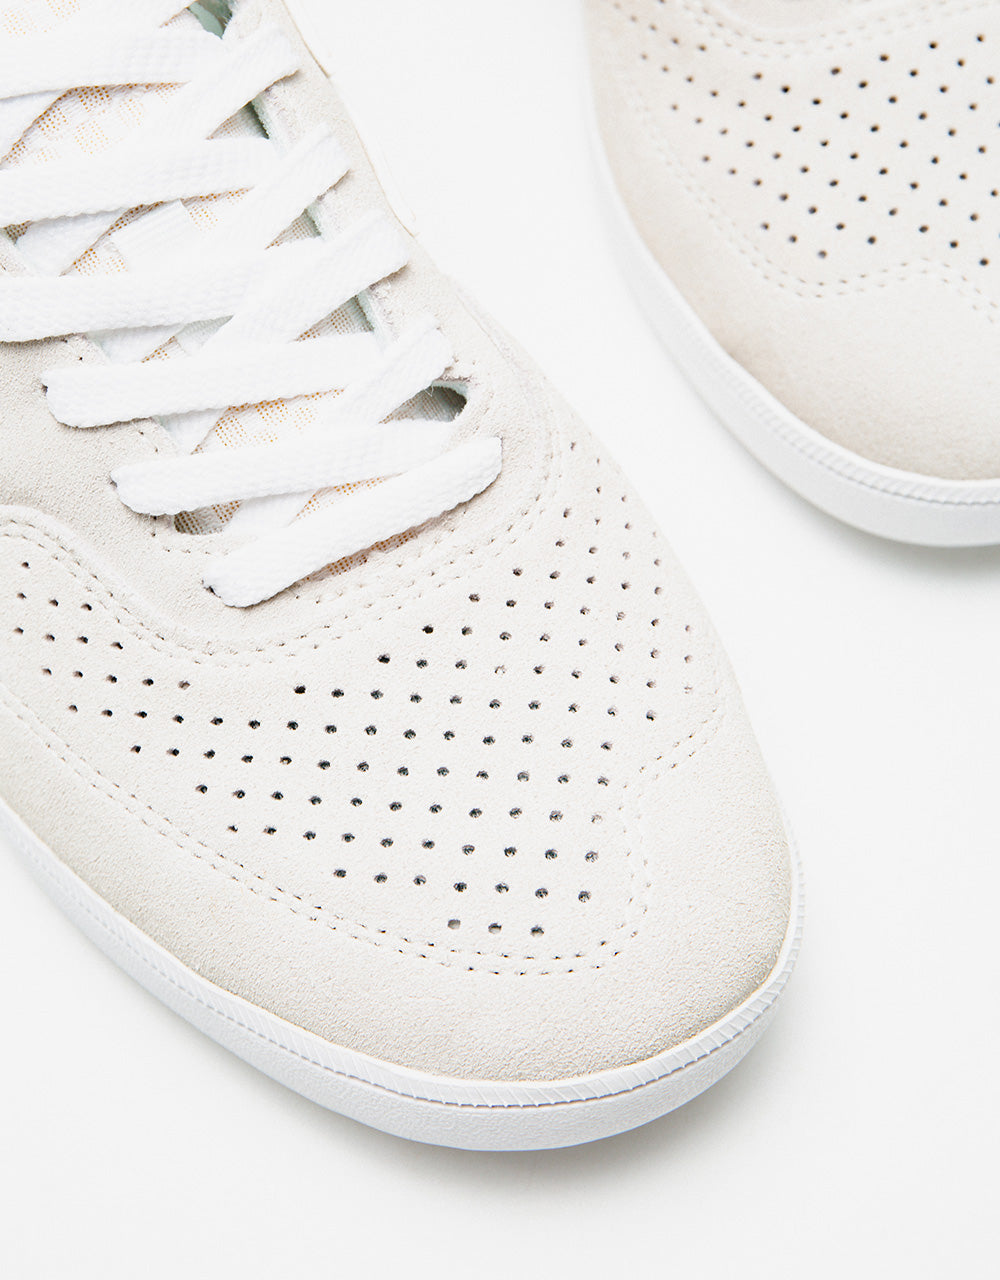 New Balance Numeric 508 Skate Shoes - White/Gold